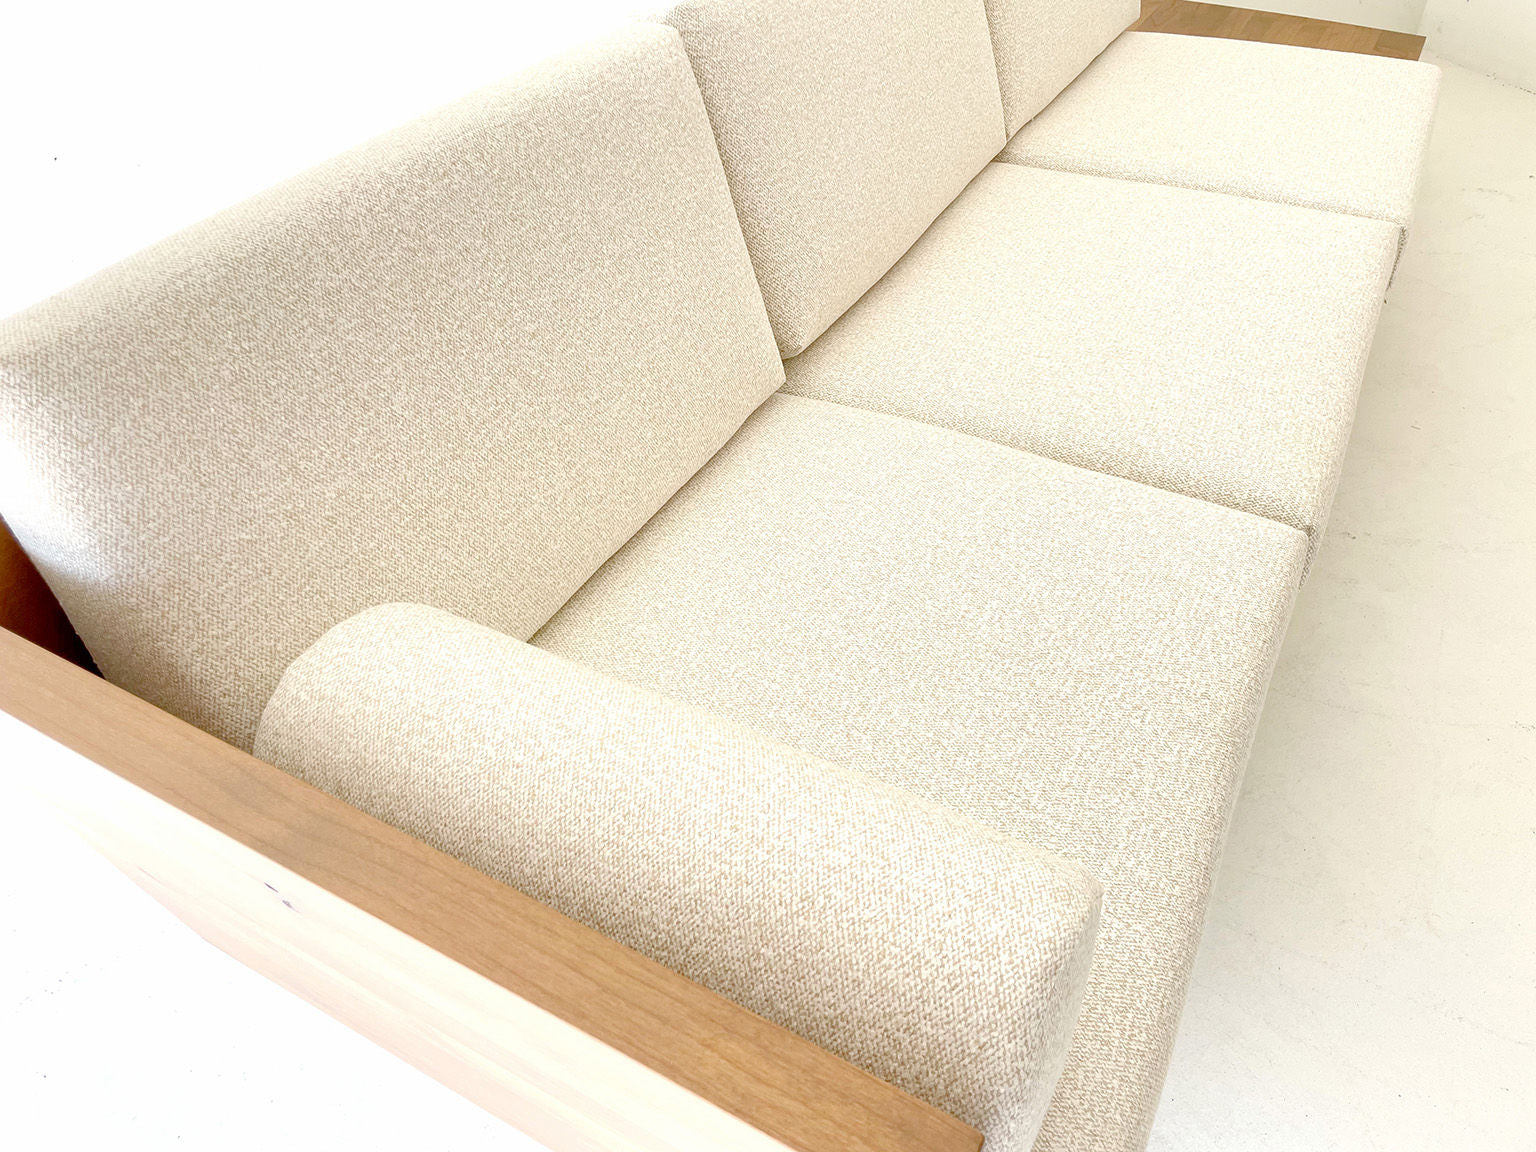 Suelo Modern Wood Sofa with Plinth Base - 2521